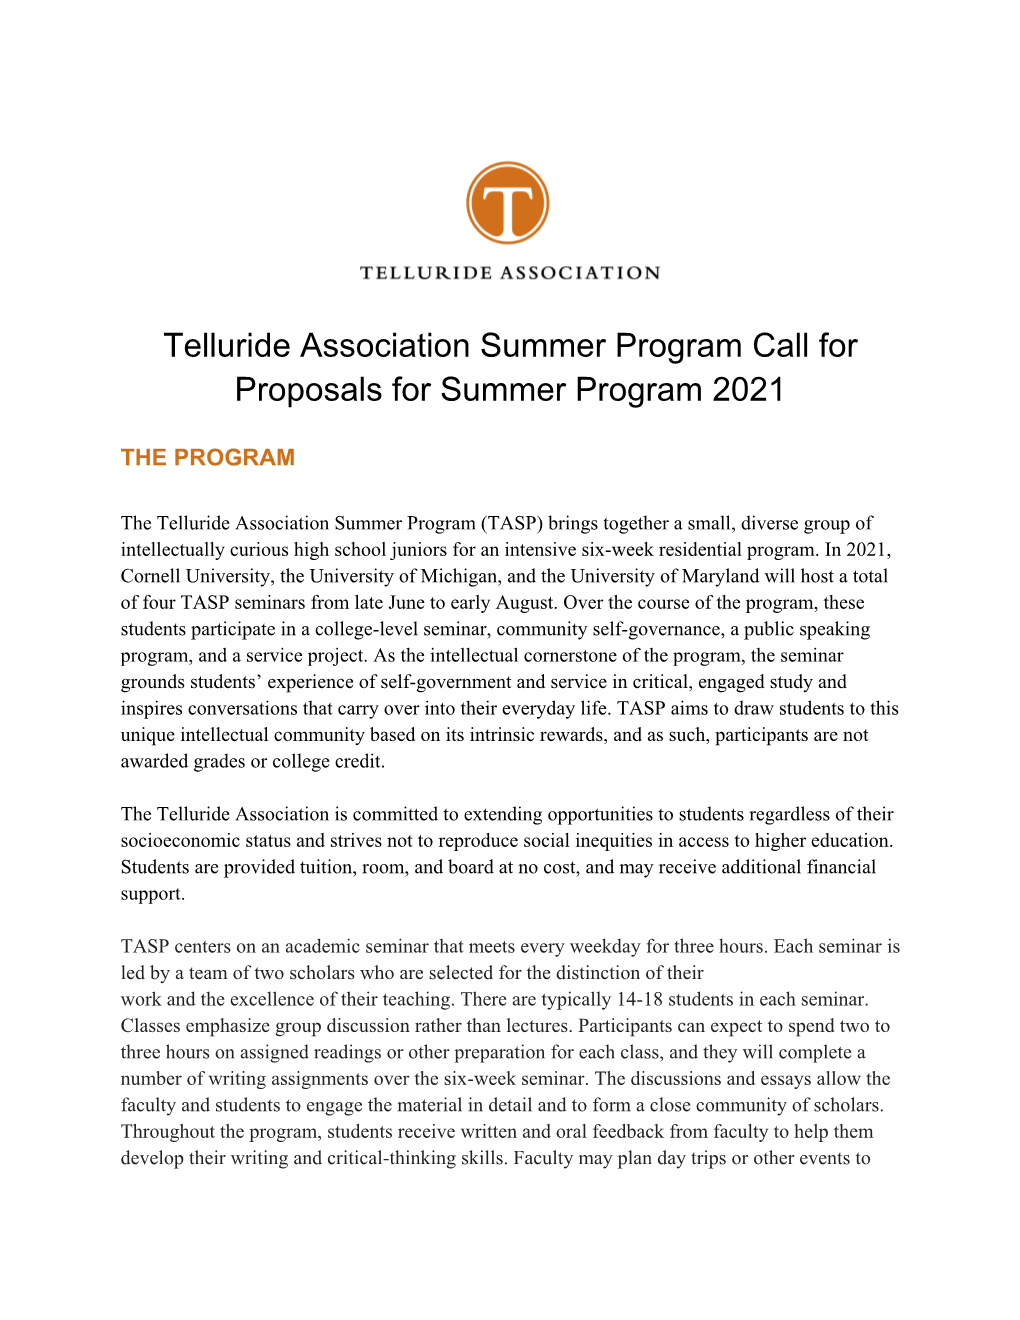 Telluride Association Summer Program Call for Proposals for Summer Program 2021